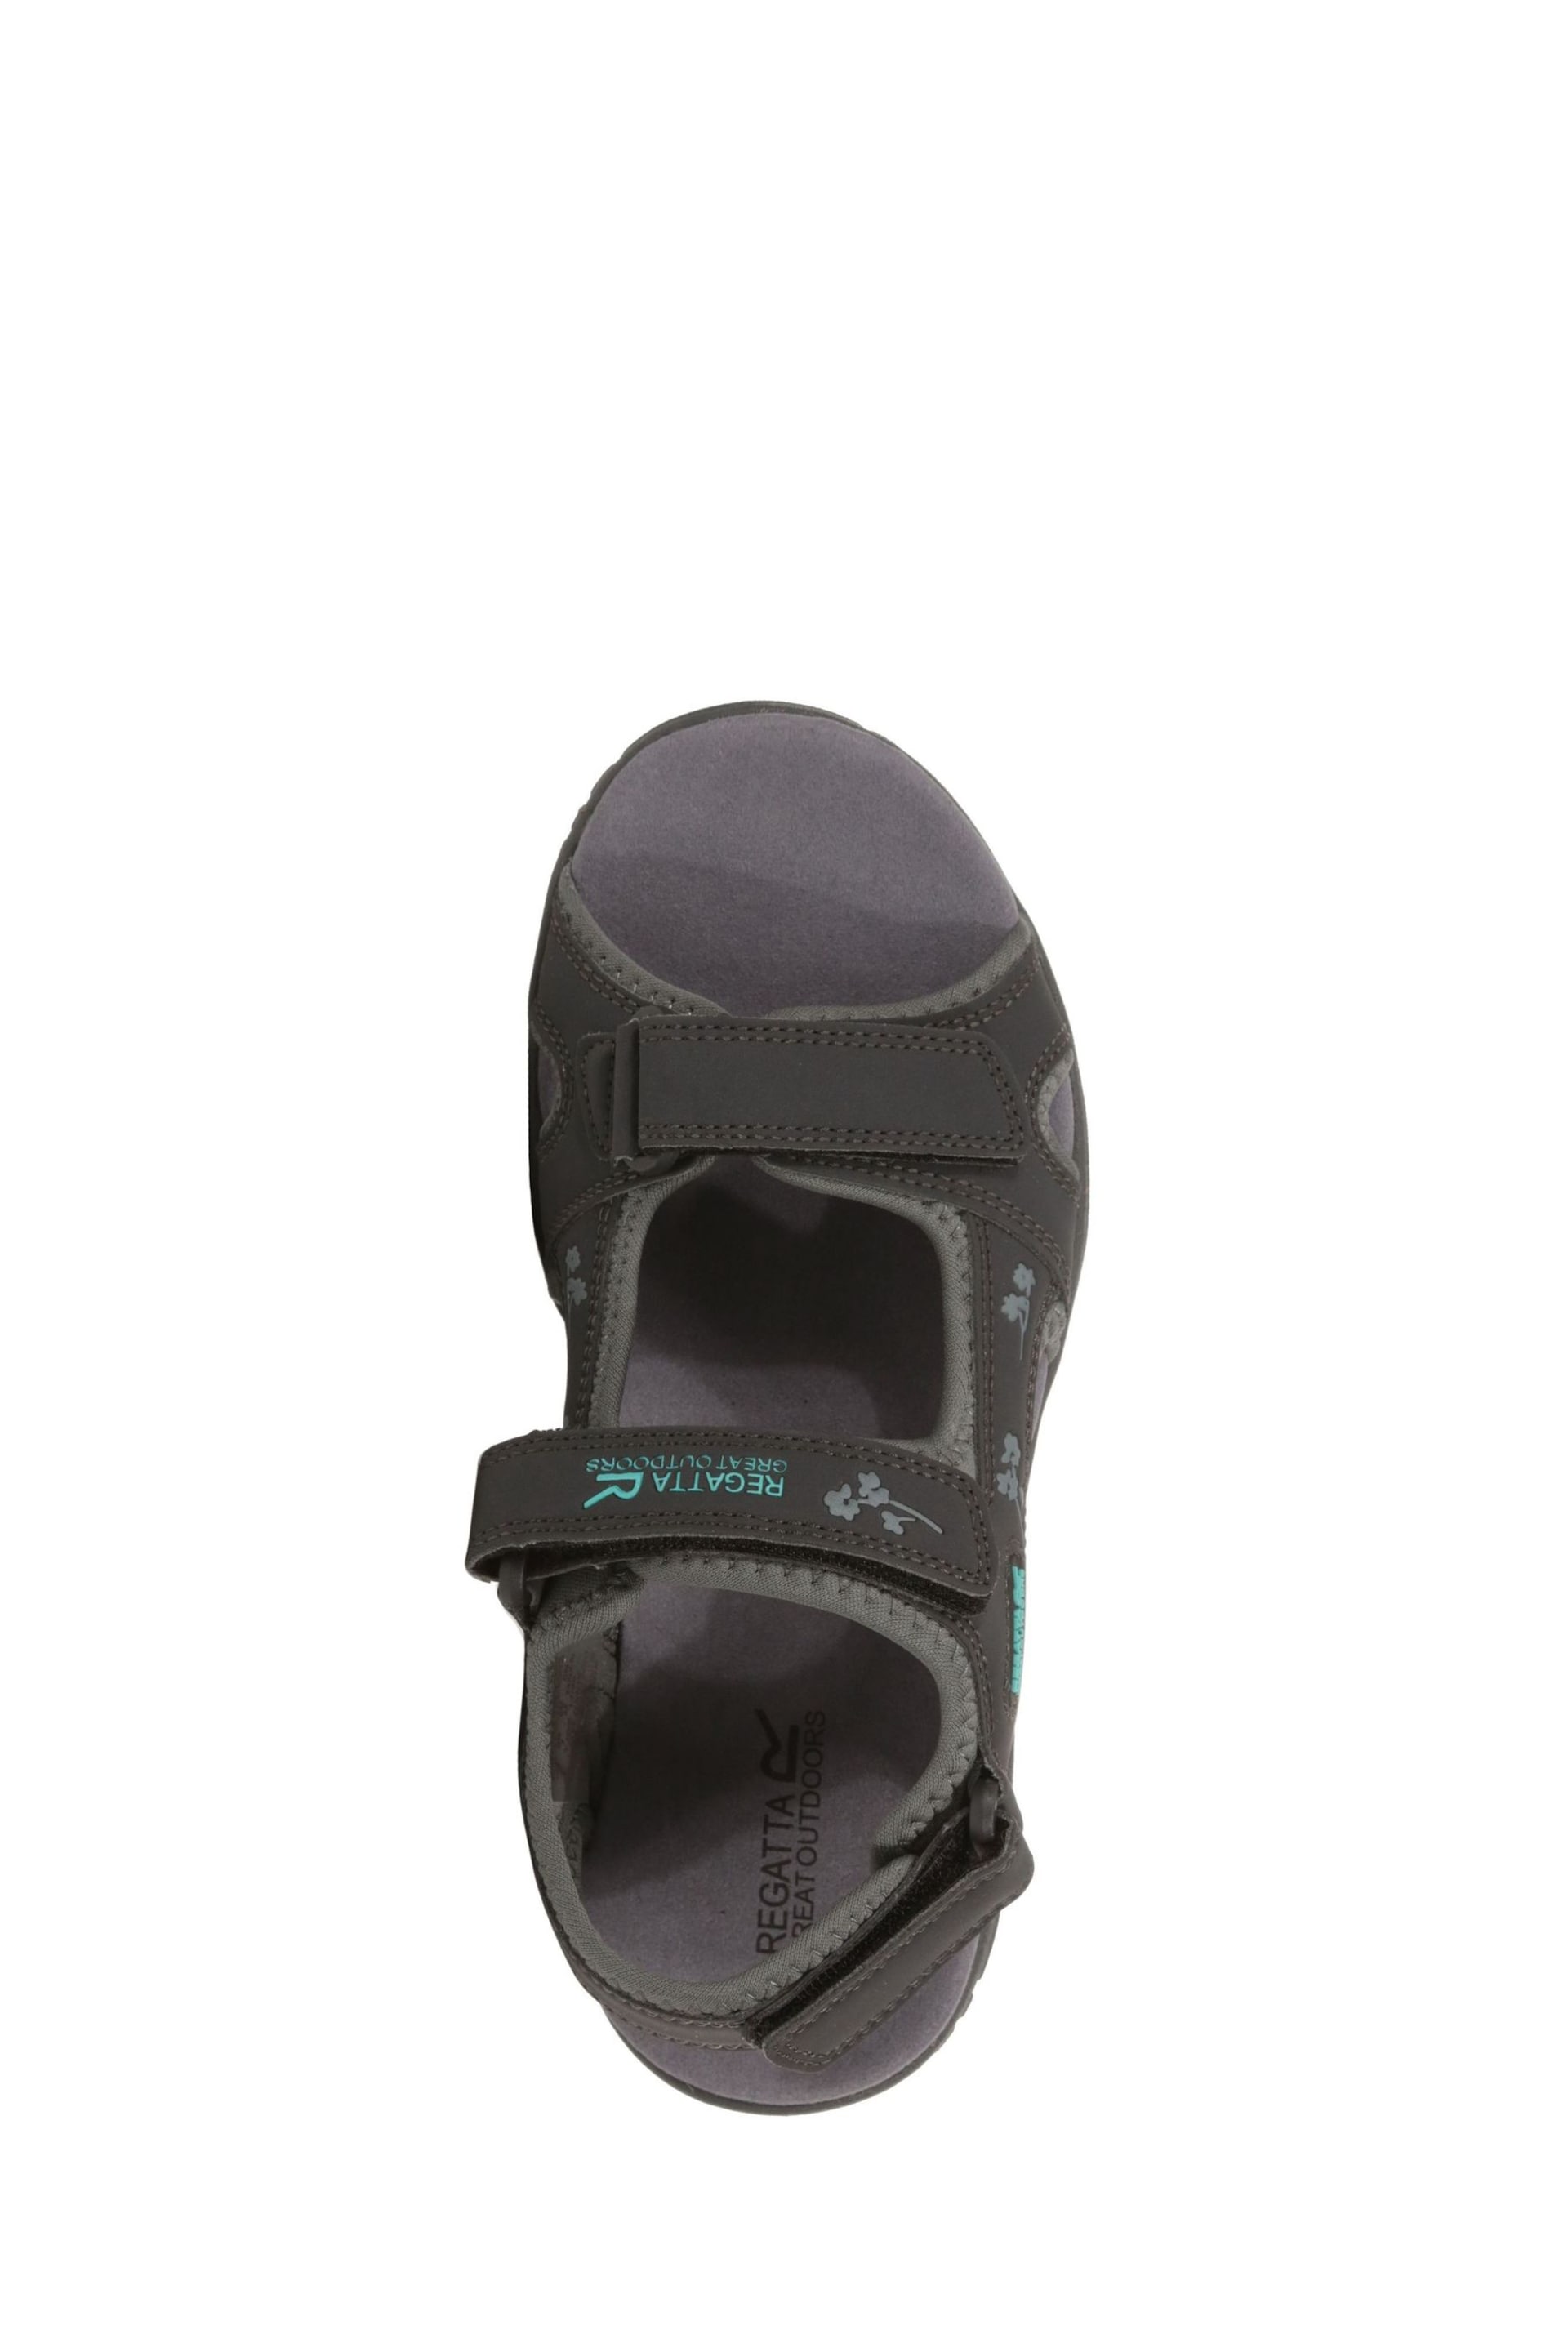 Regatta Grey Lady Haris Sandals - Image 5 of 6